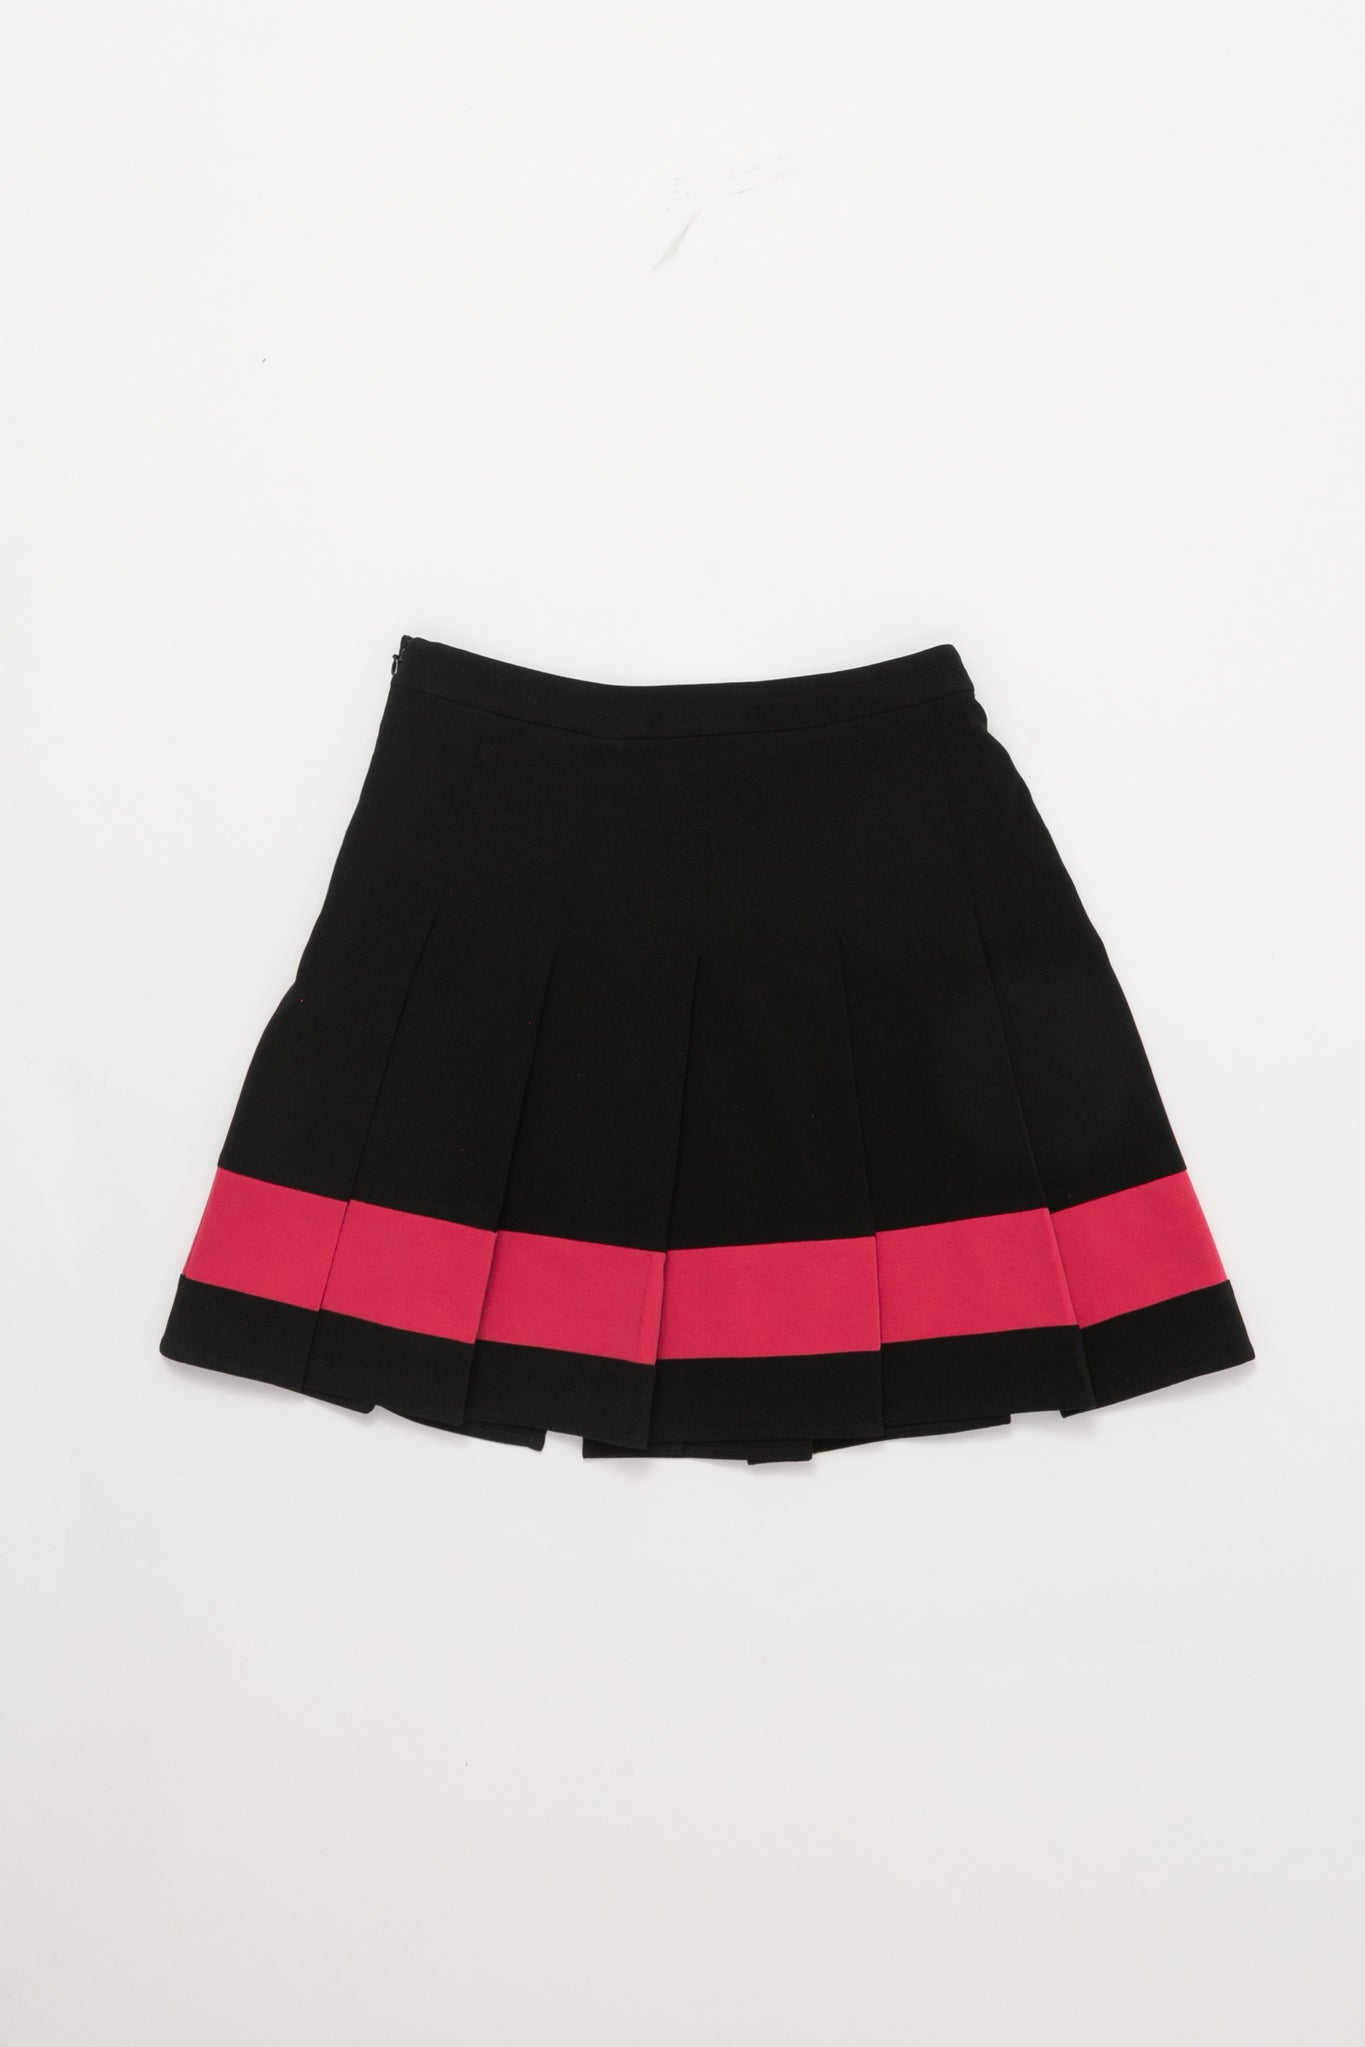 Moschino Black & Pink Pleated Skirt